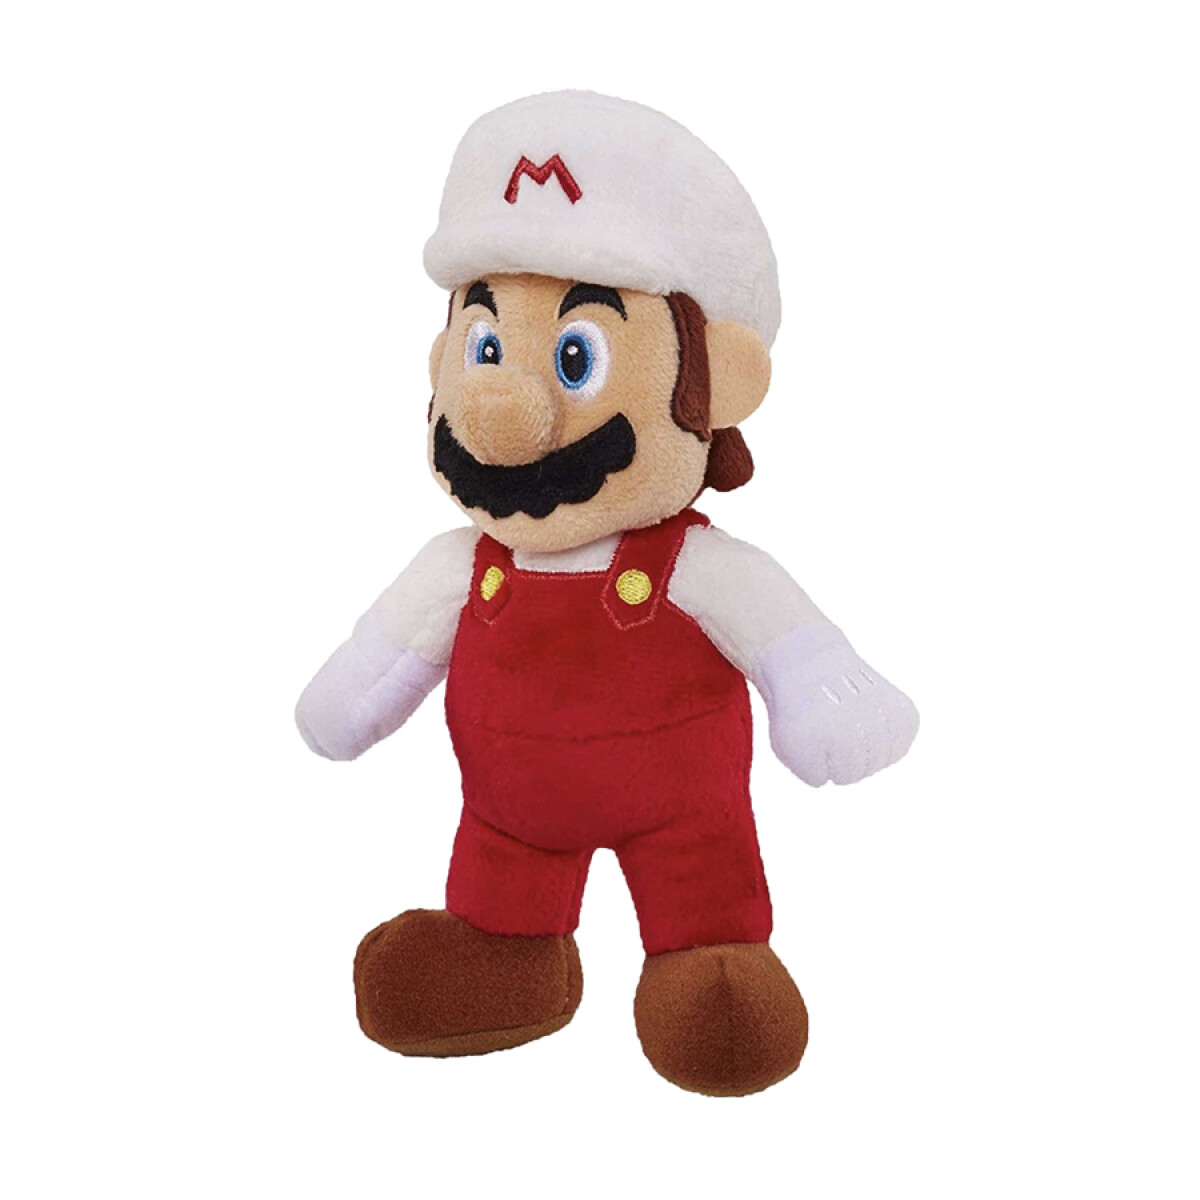 Super Mario - Fire Mario Peluche 